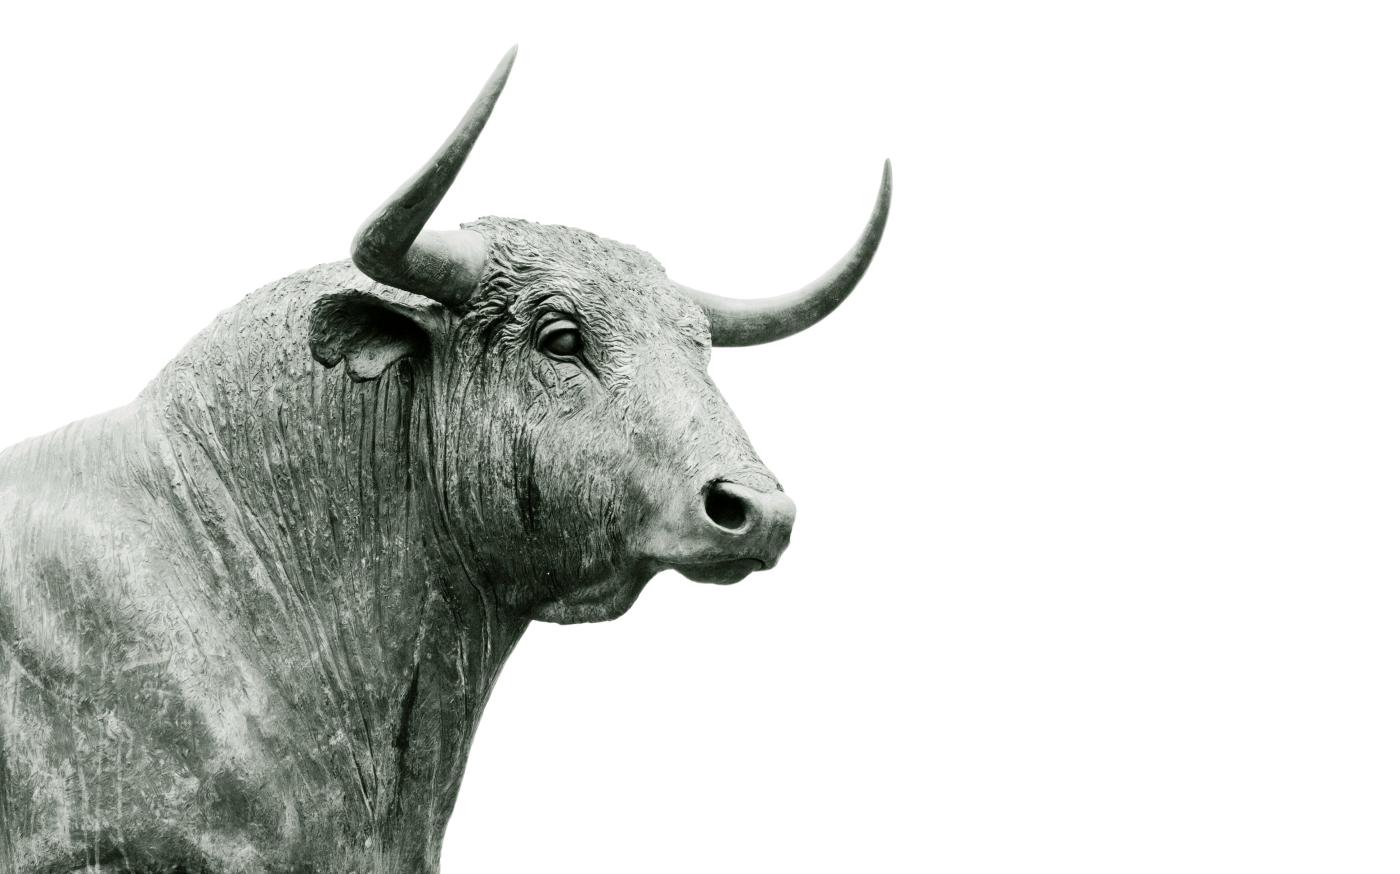 bull grayscale photo by Hans Eiskonen courtesy of Unsplash.